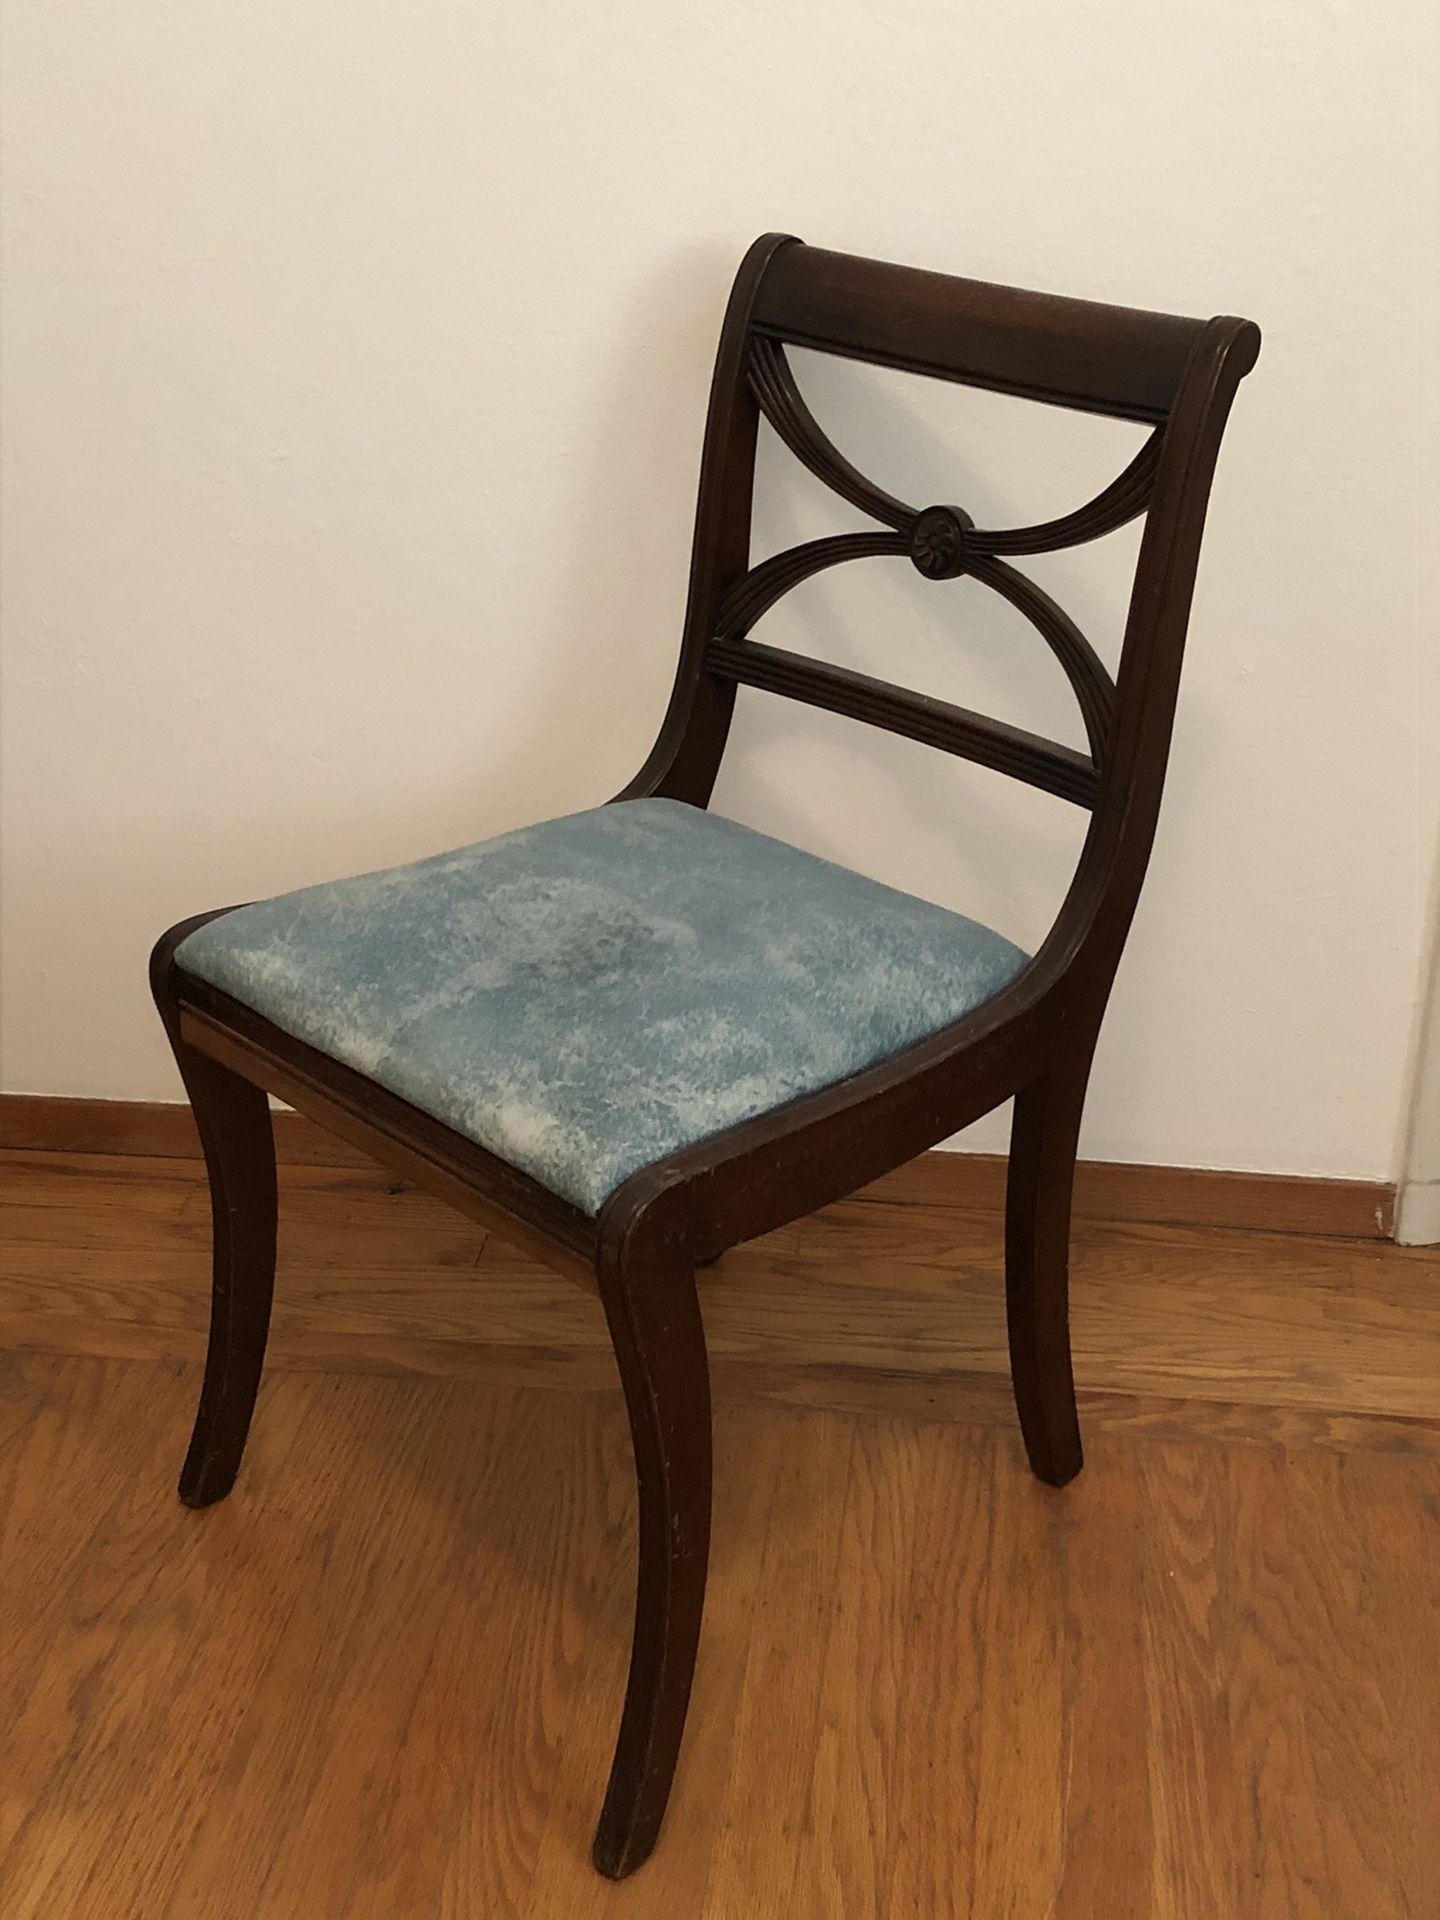 Antique Accent Chair